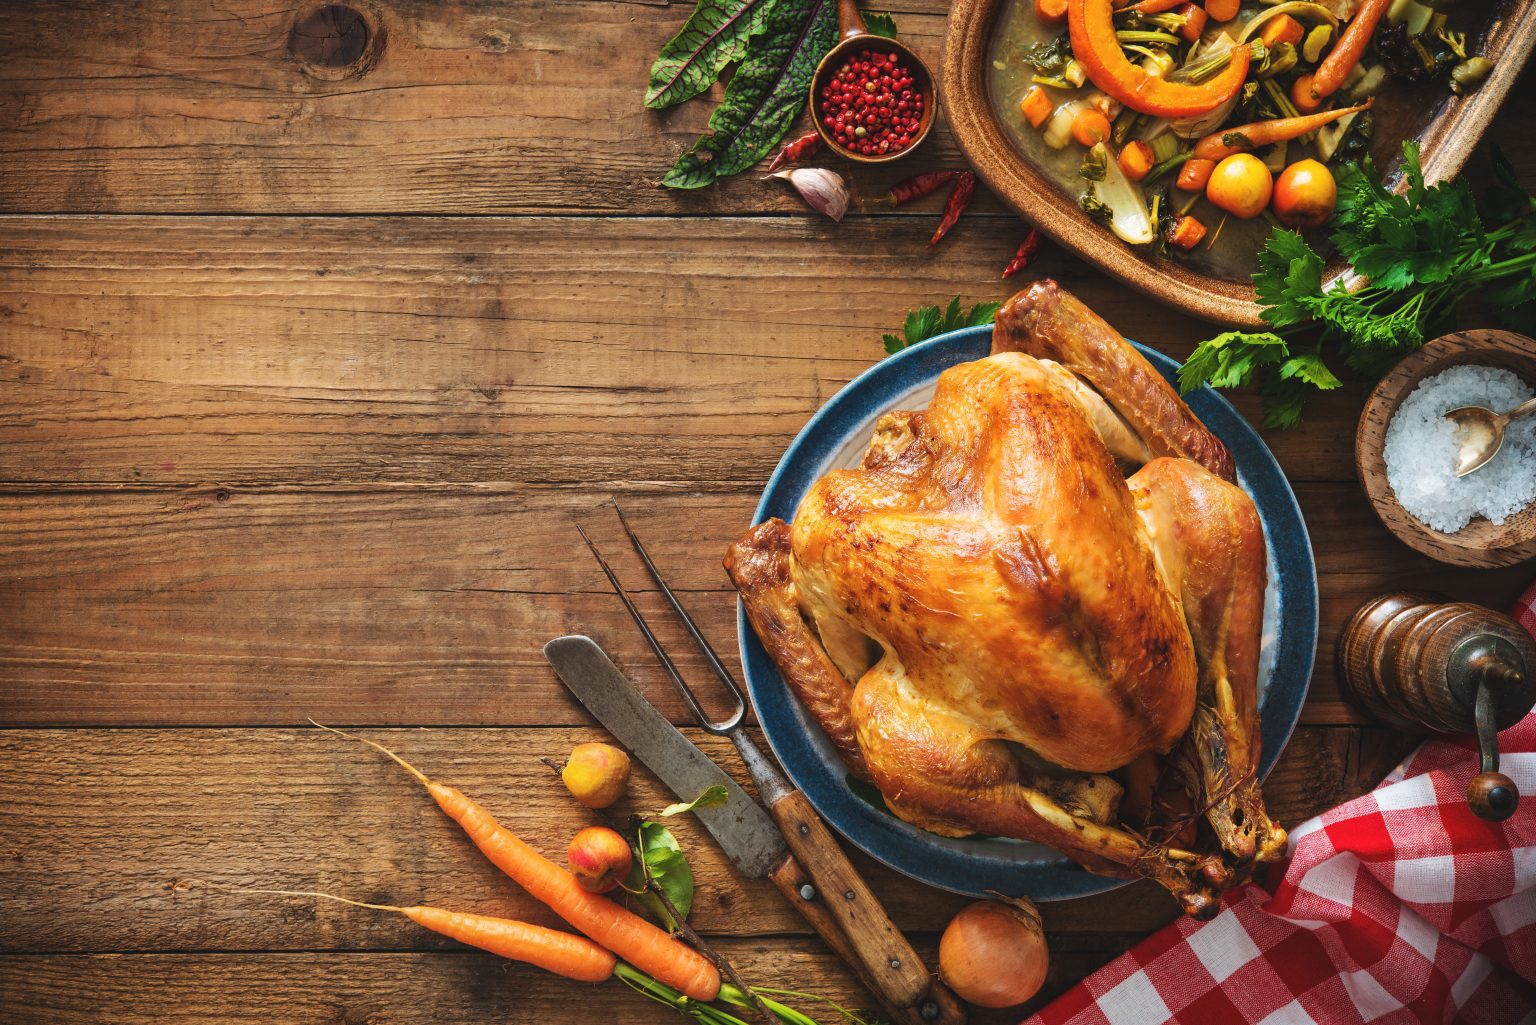 Mastering turkey safety this Thanksgiving